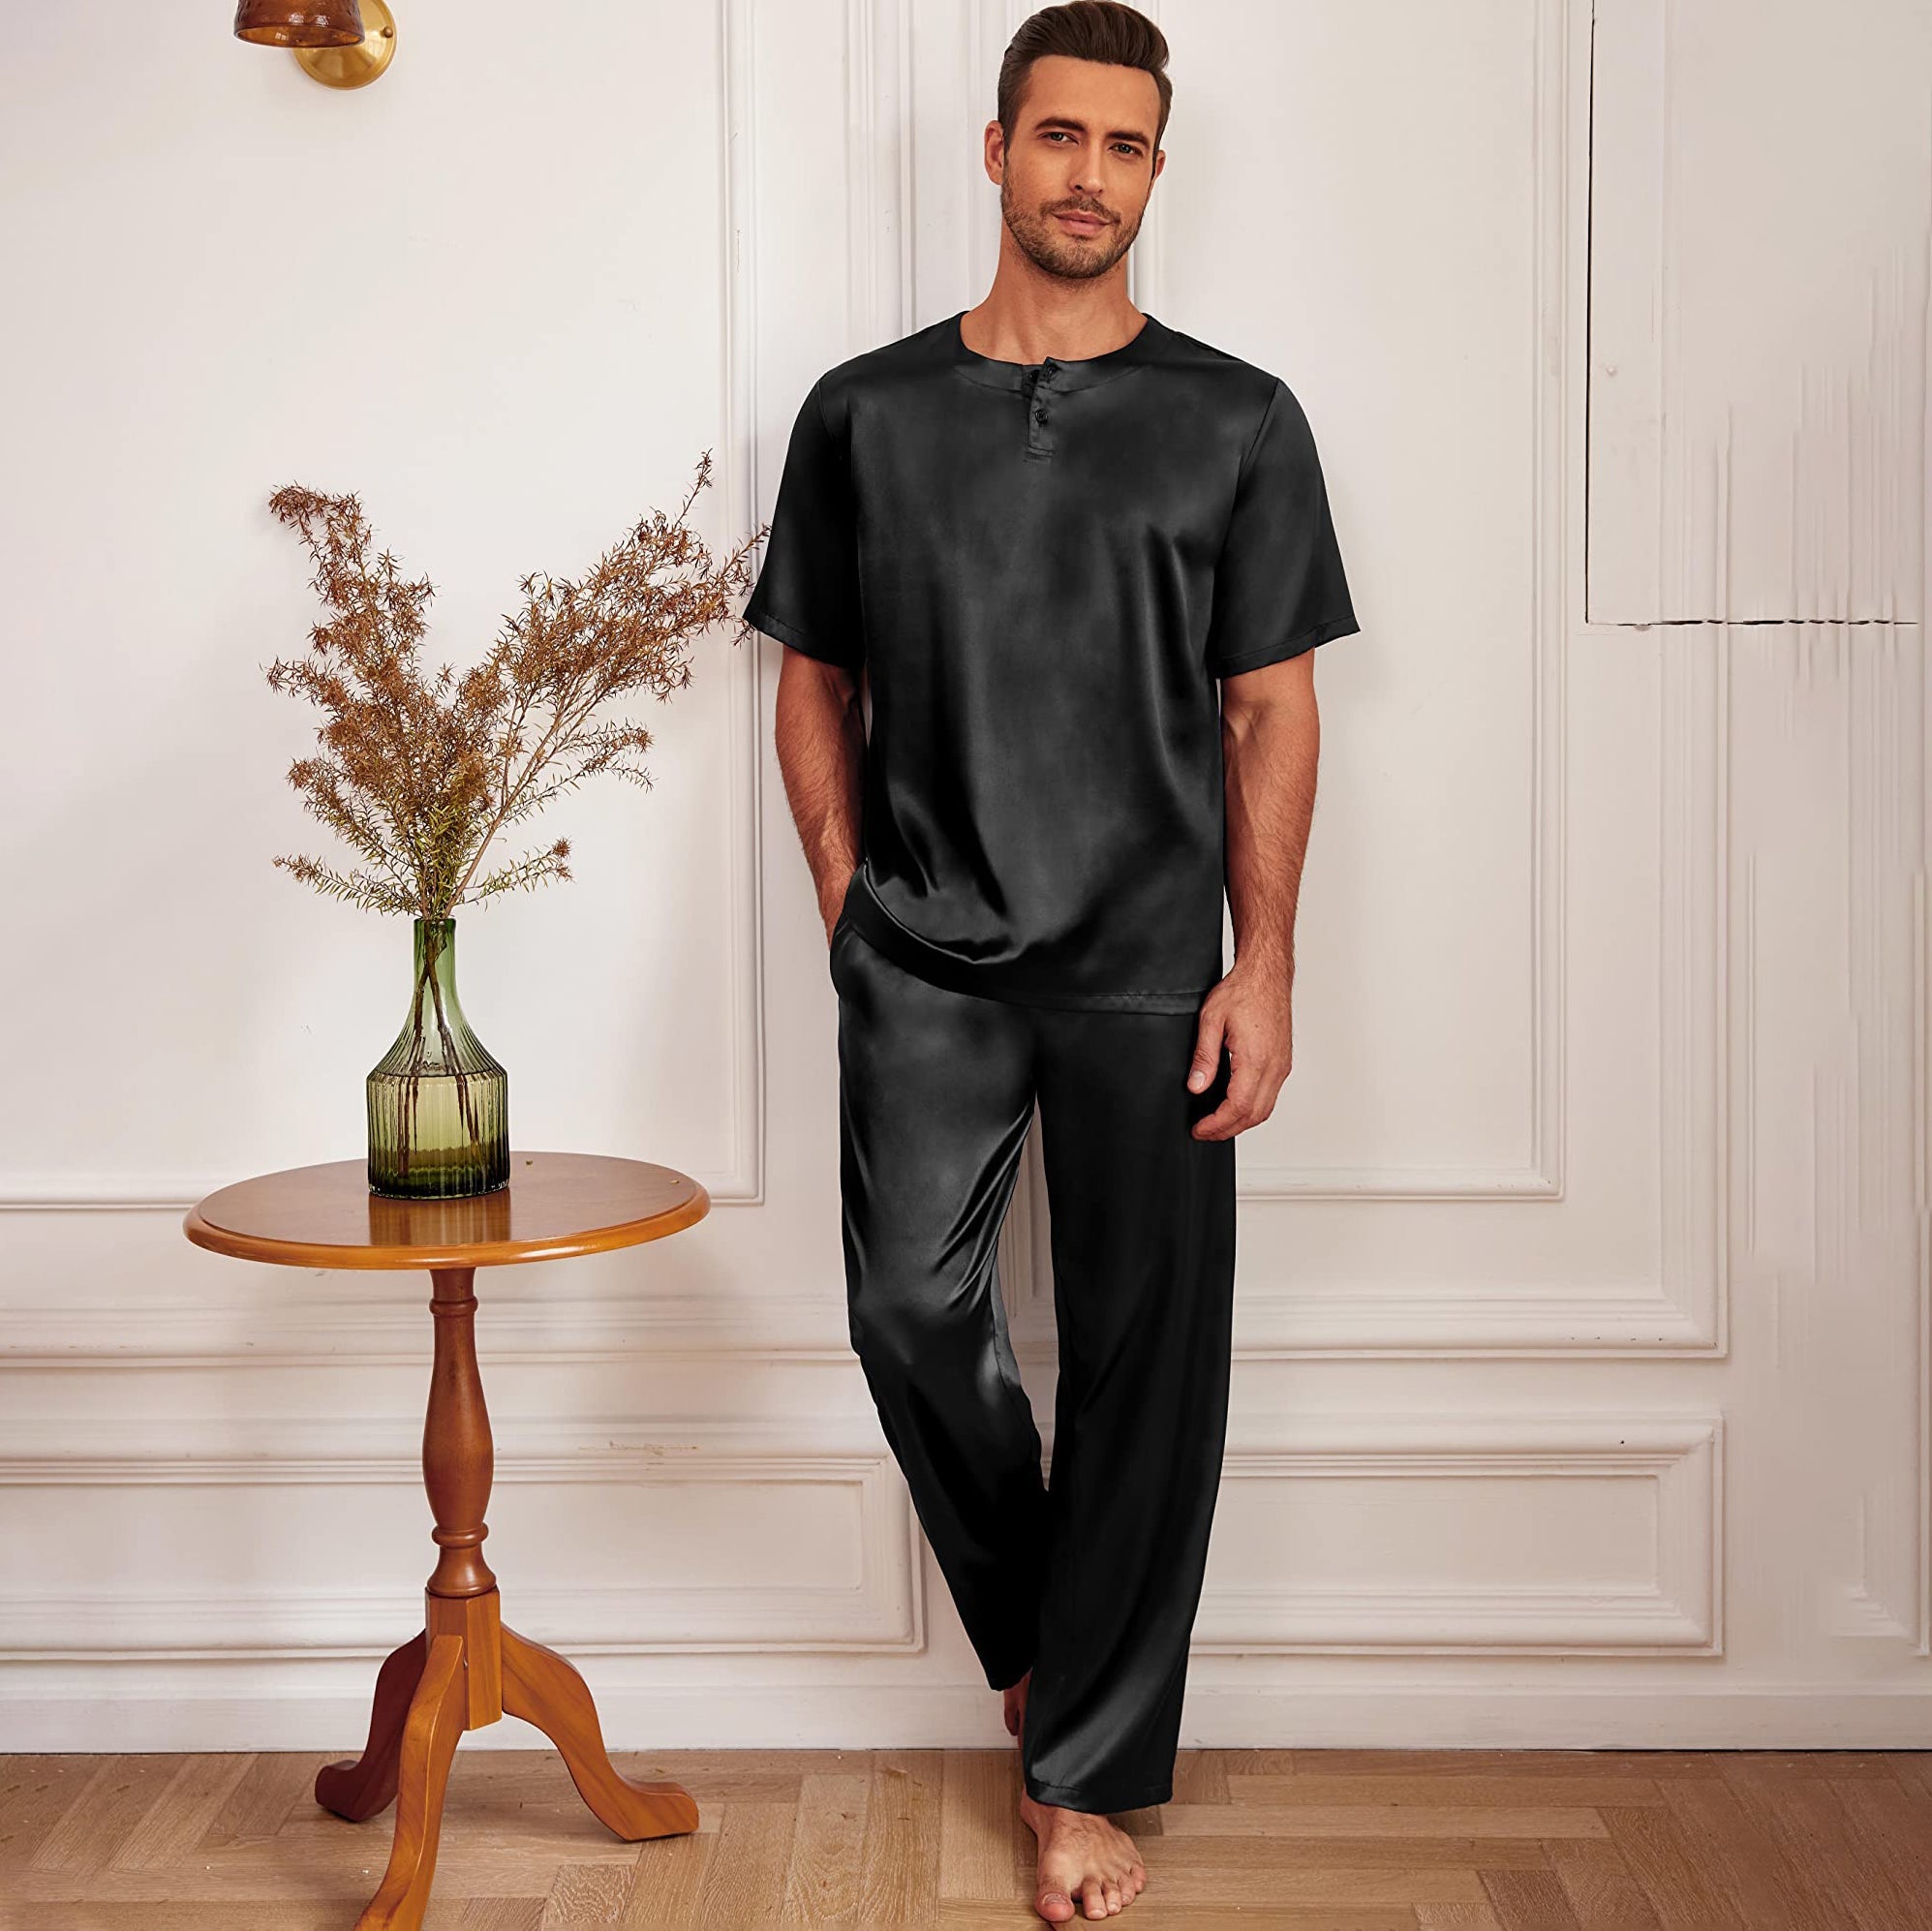 Men's Silk Pajamas set Simple & Comfortable Silk sleepwear - slipintosoft